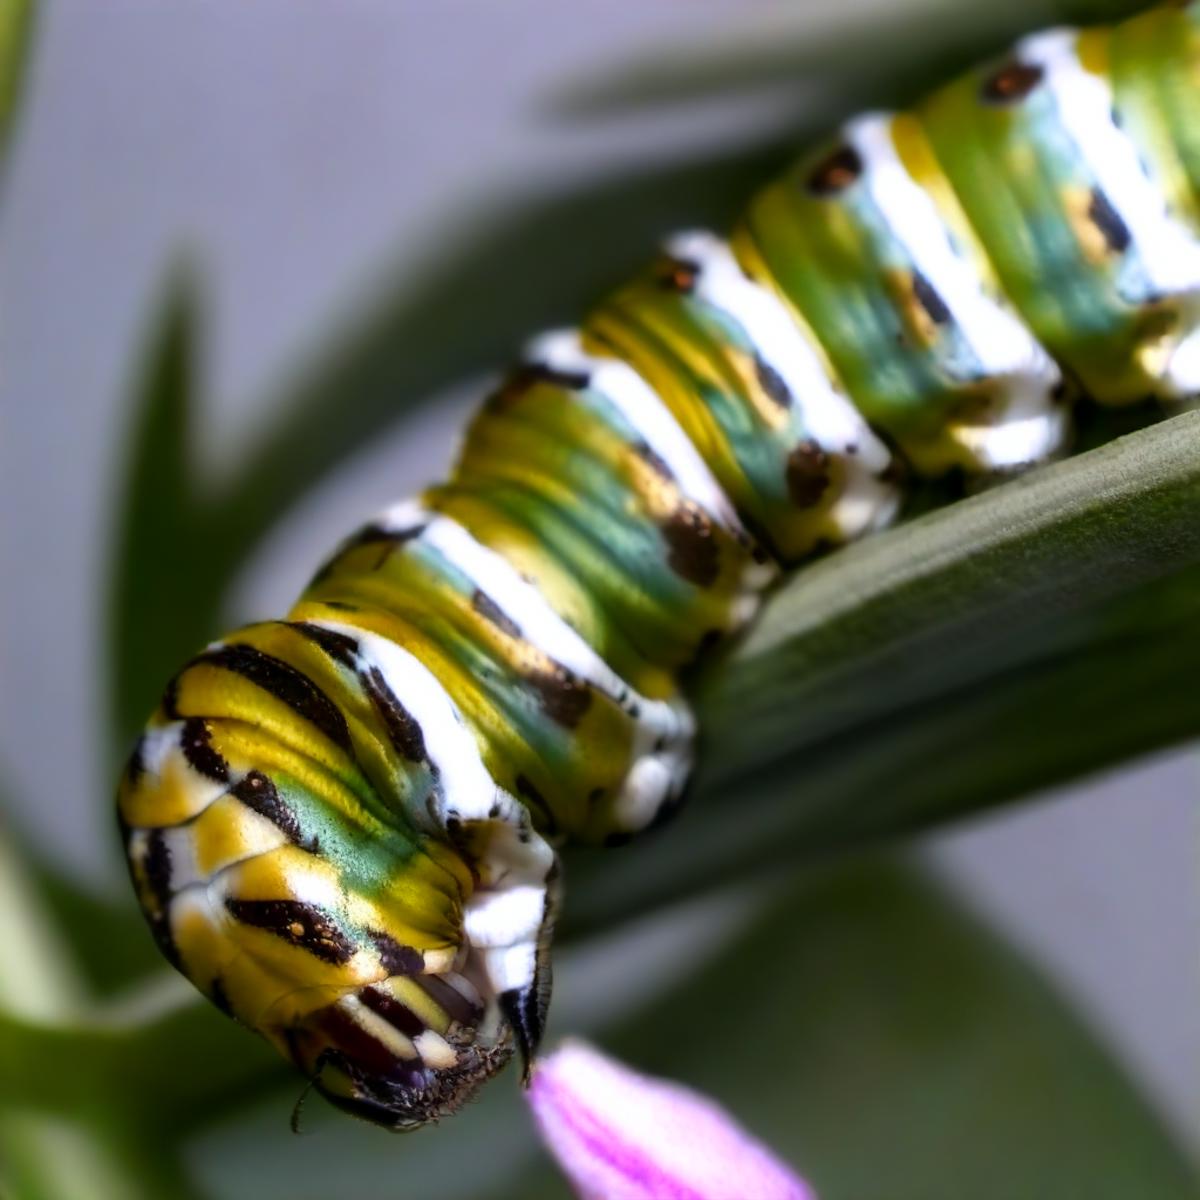 Caterpillar_XL image by jrrtemp262